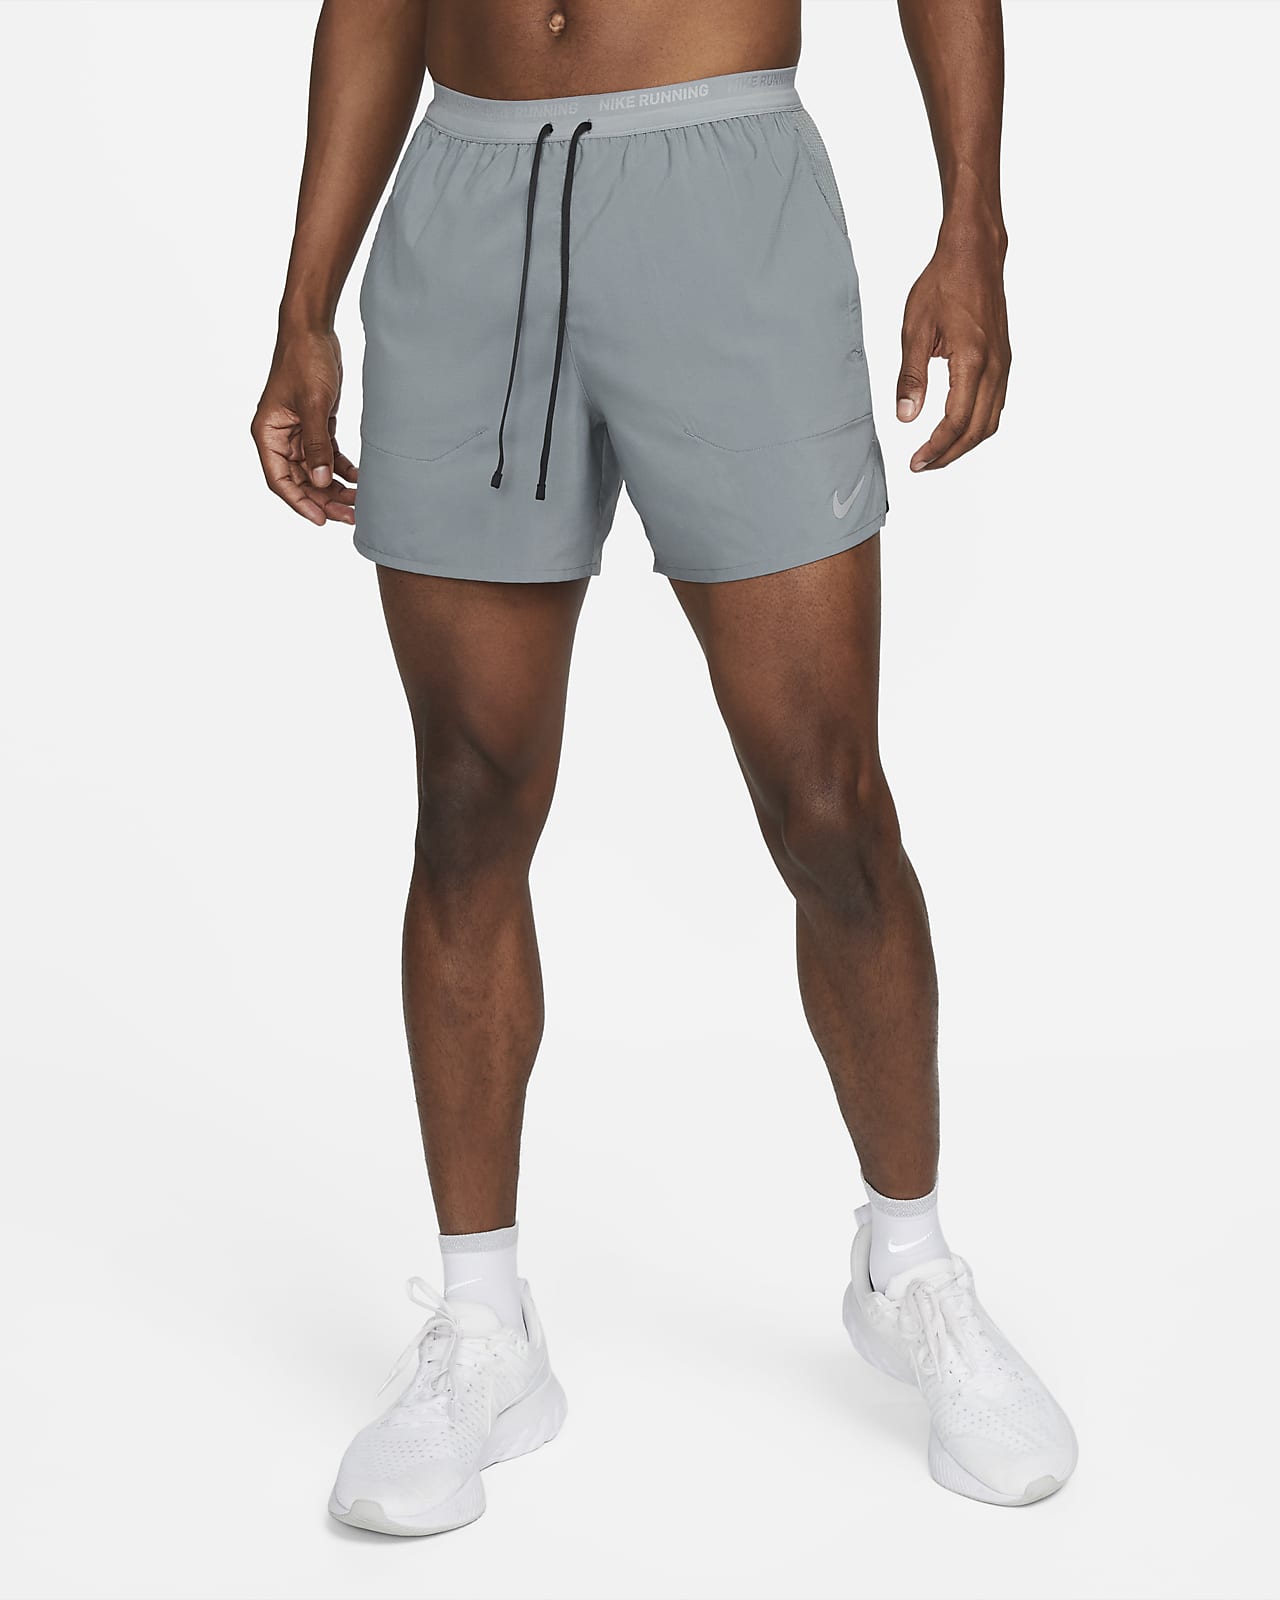 Nike Stride Pantalons curts amb eslip incorporat de 13 cm Dri-FIT de running - Home